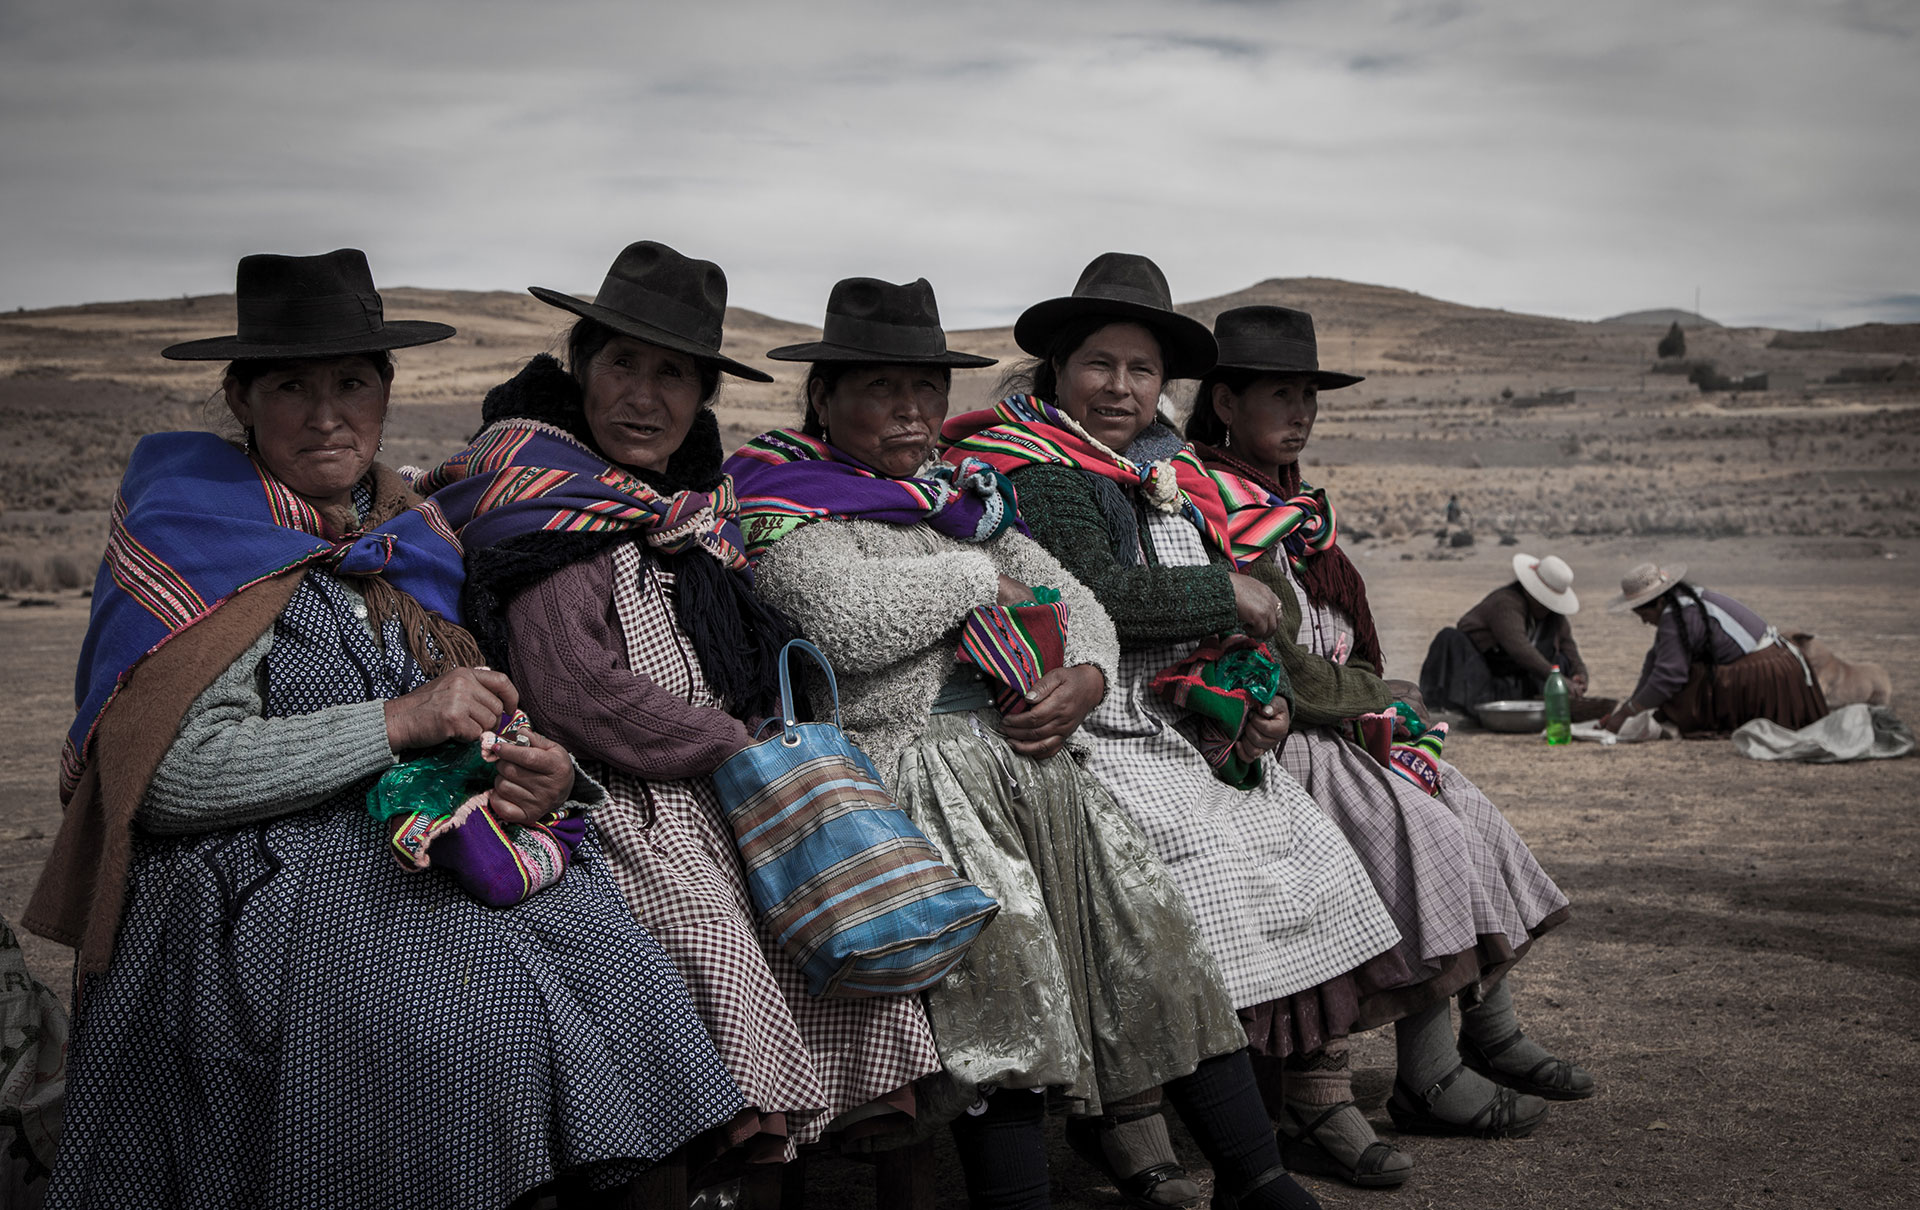 Bolivianische Frauen